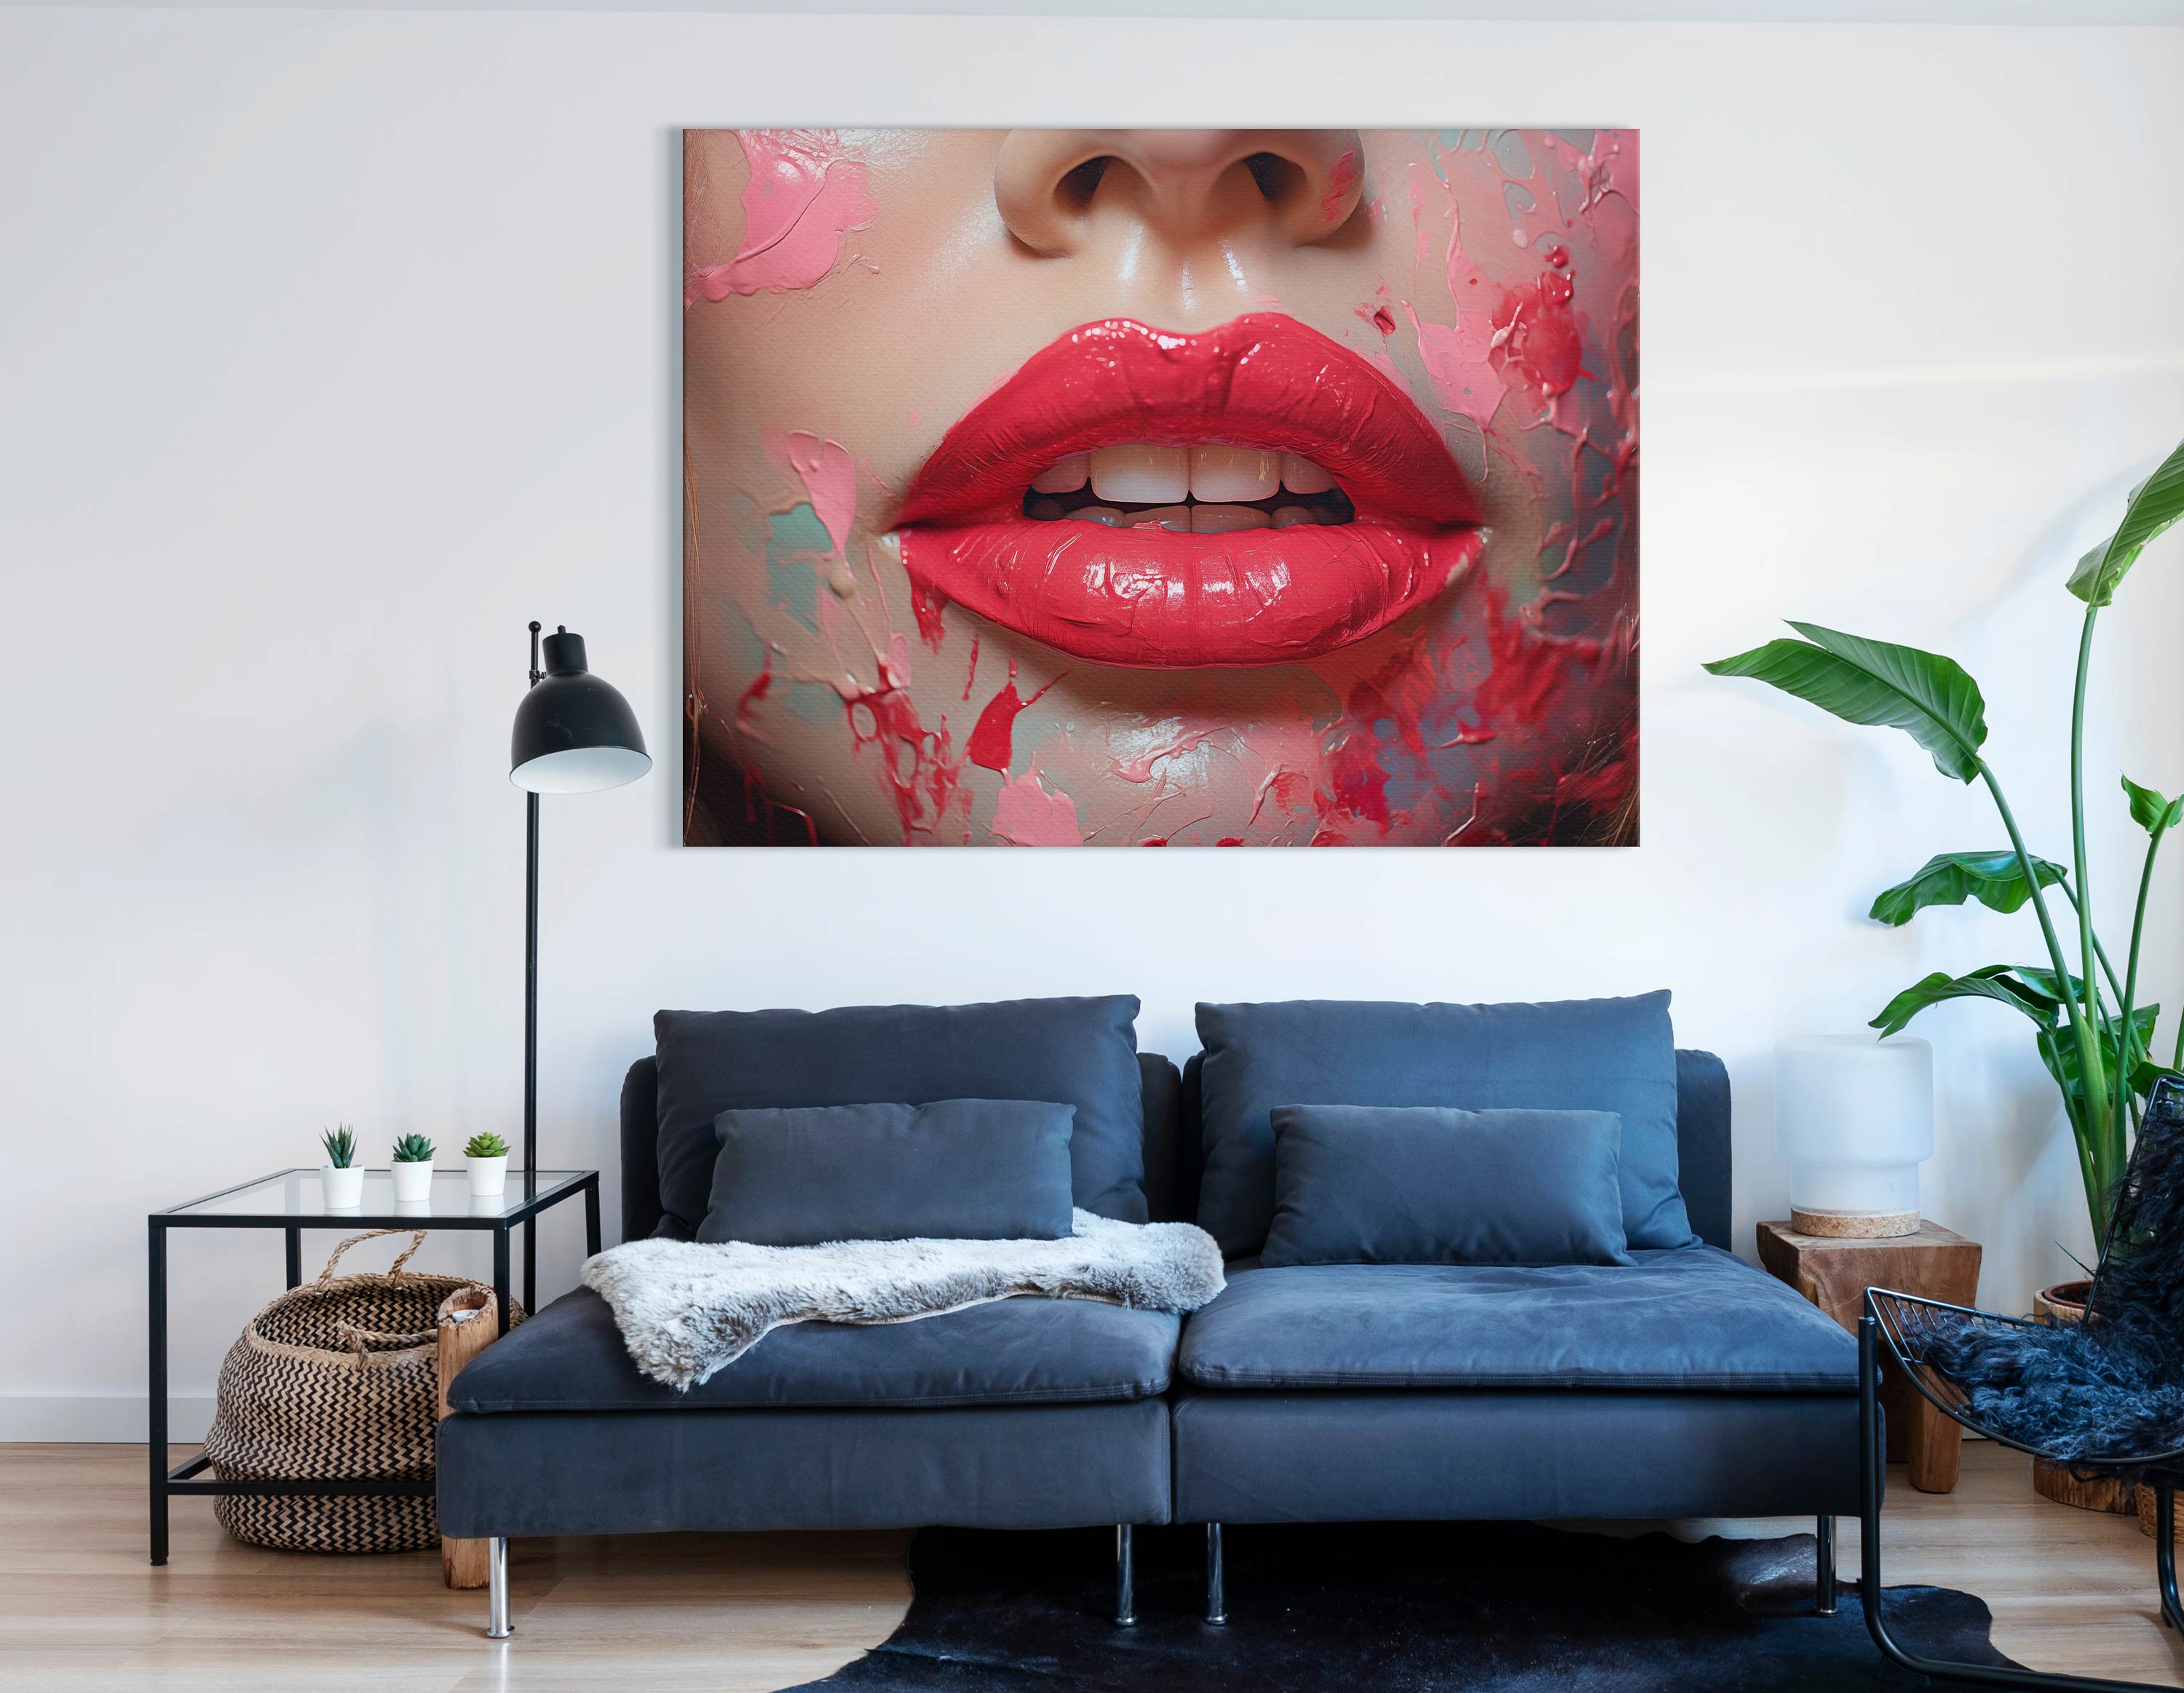 Artistic Lips Wall Art   